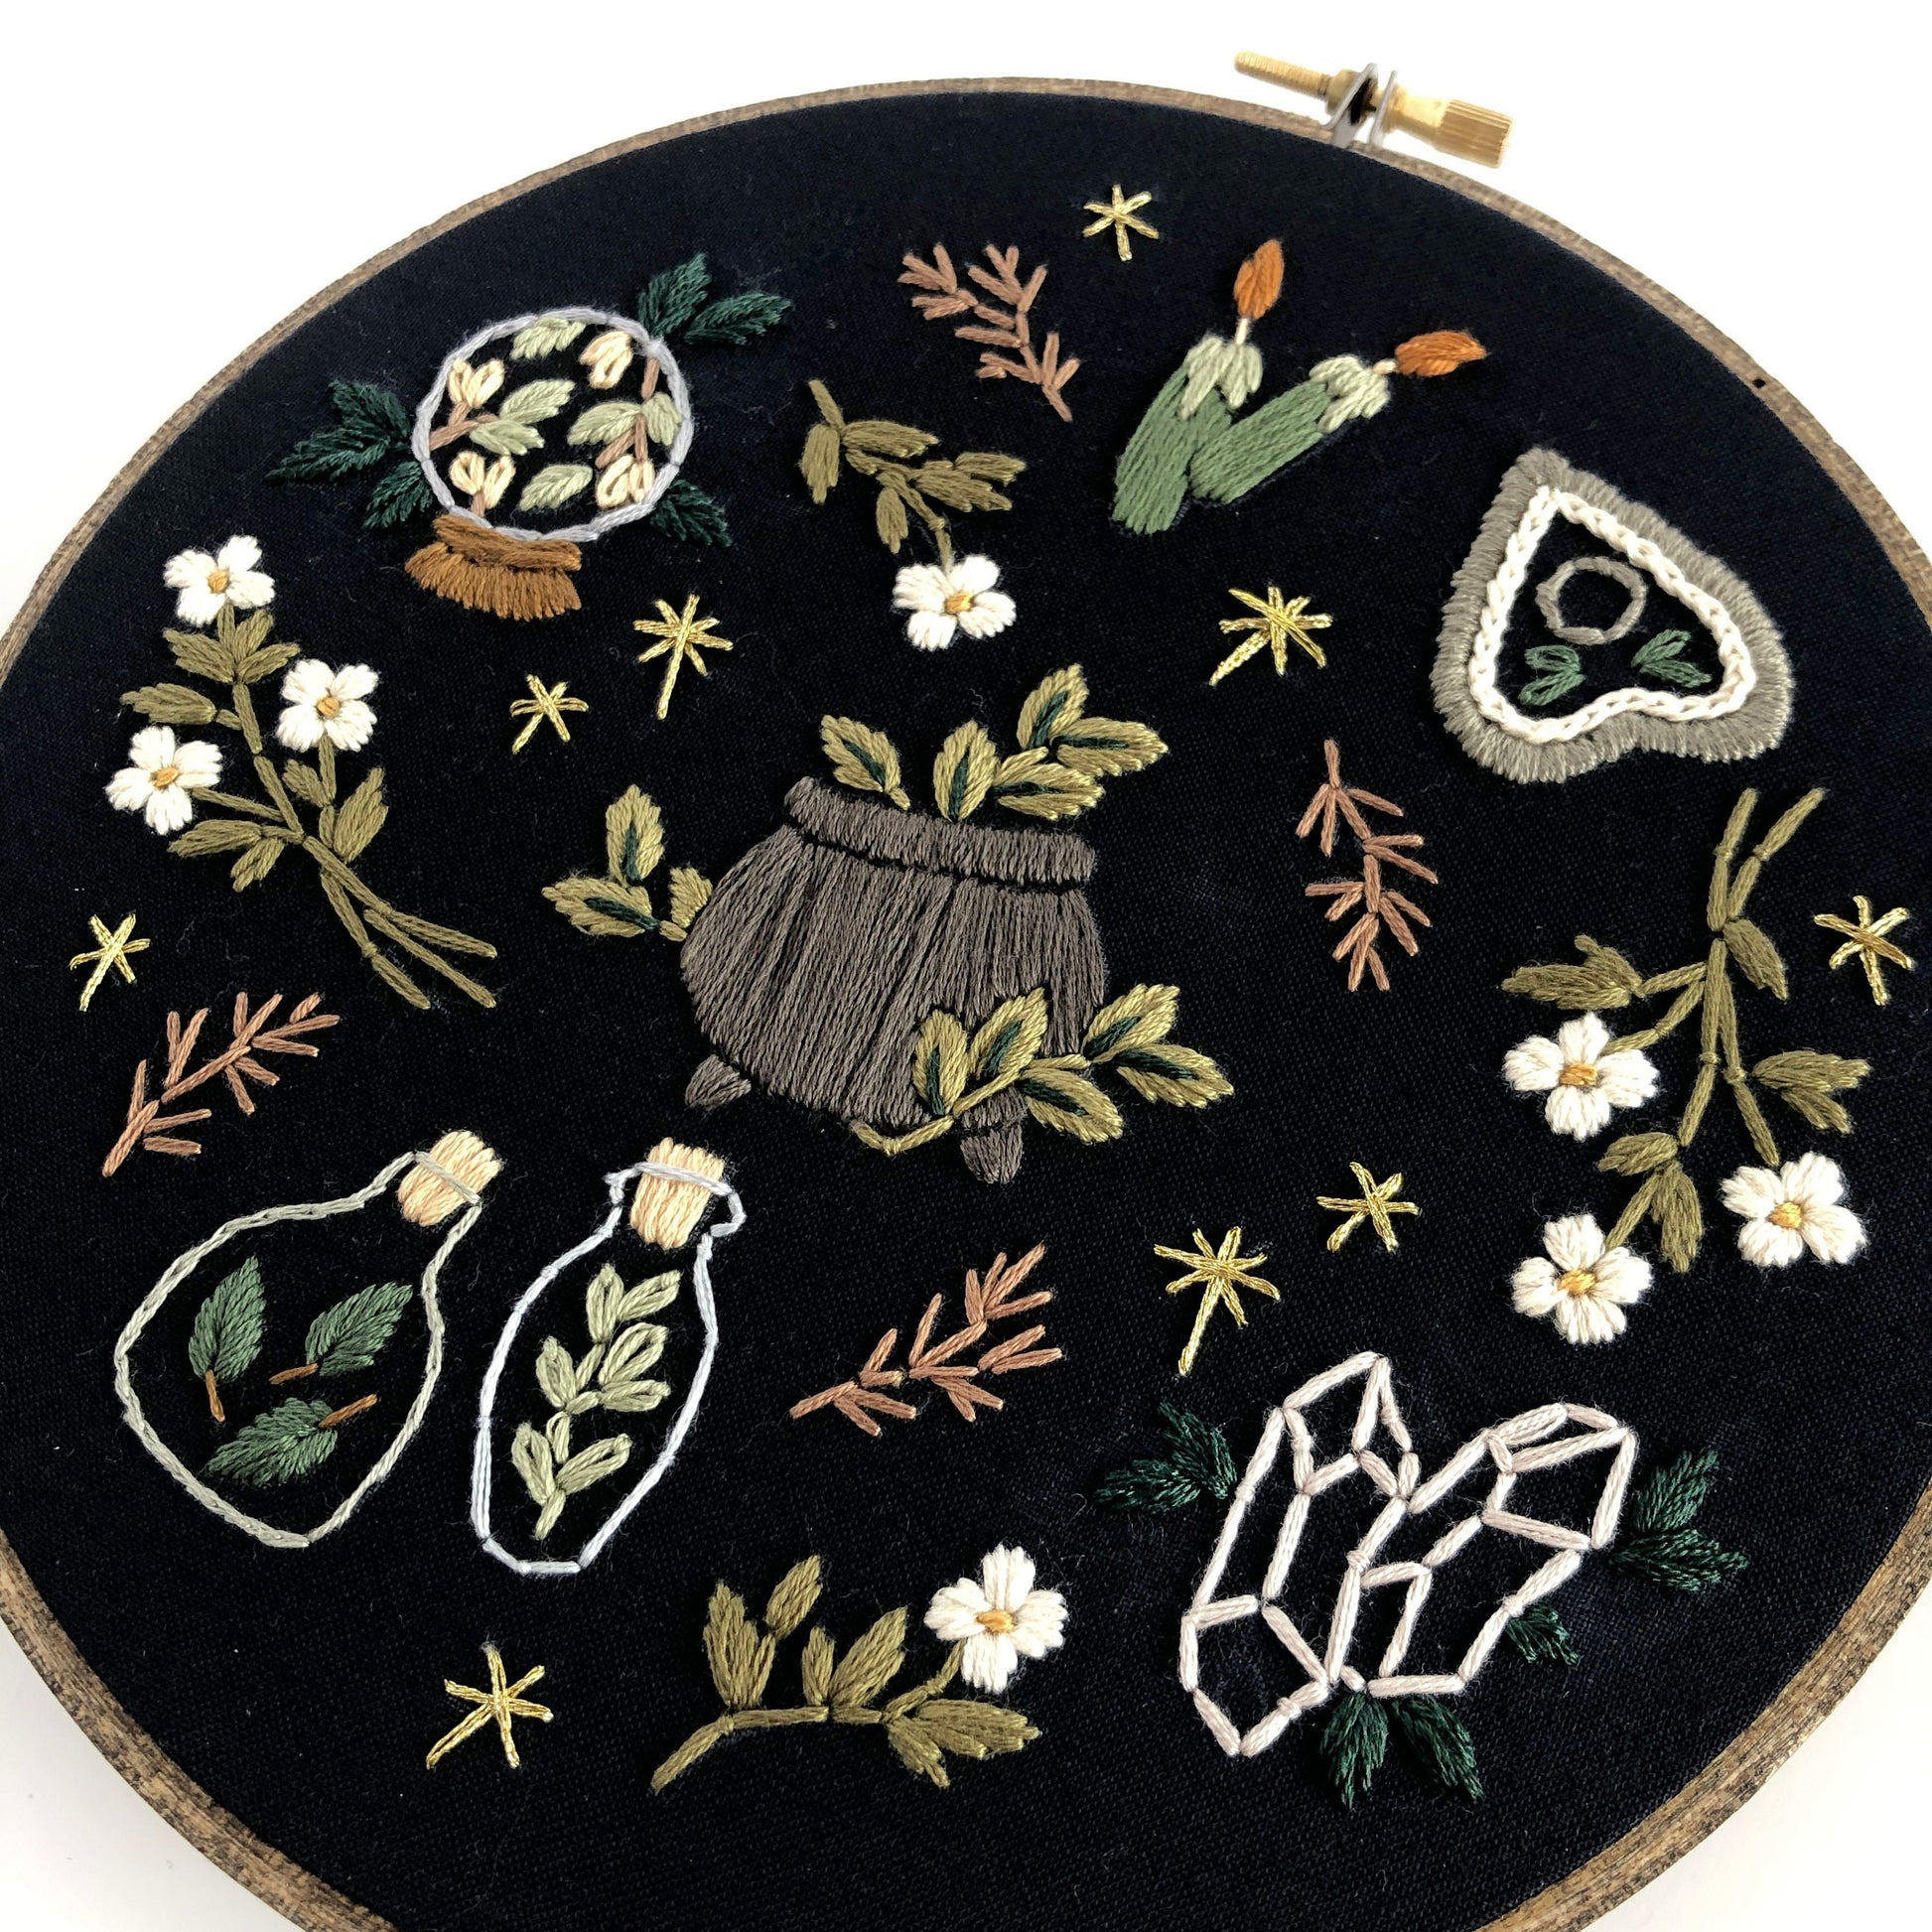 Garden Witch Embroidery Pattern. Beginner Embroidery pattern. Digital Download. 7" embroidery hoop. Gothic decor. Halloween Embroidery